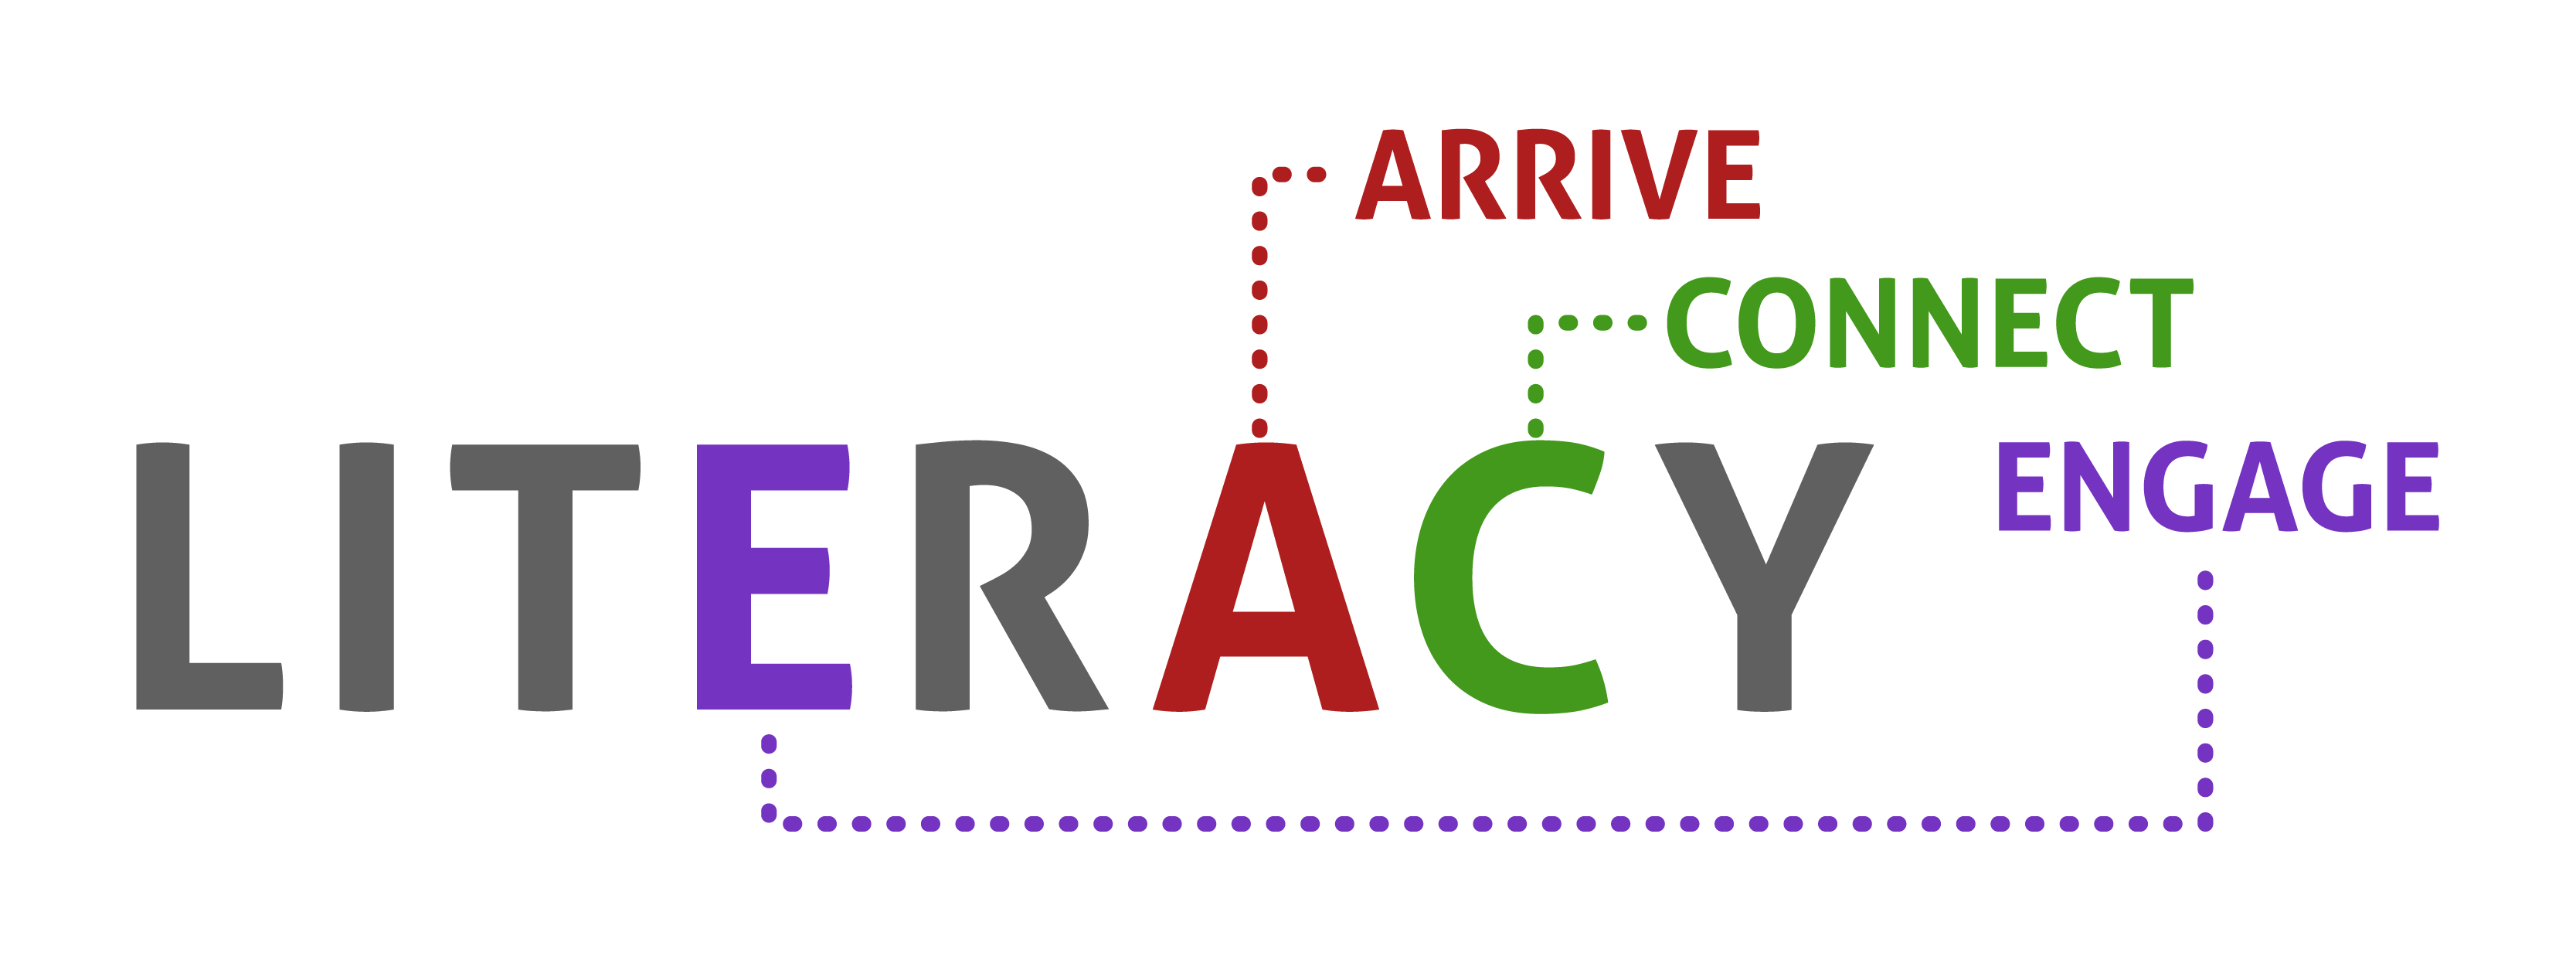 A-C-E: Three Things I Learned While Teaching Literacy